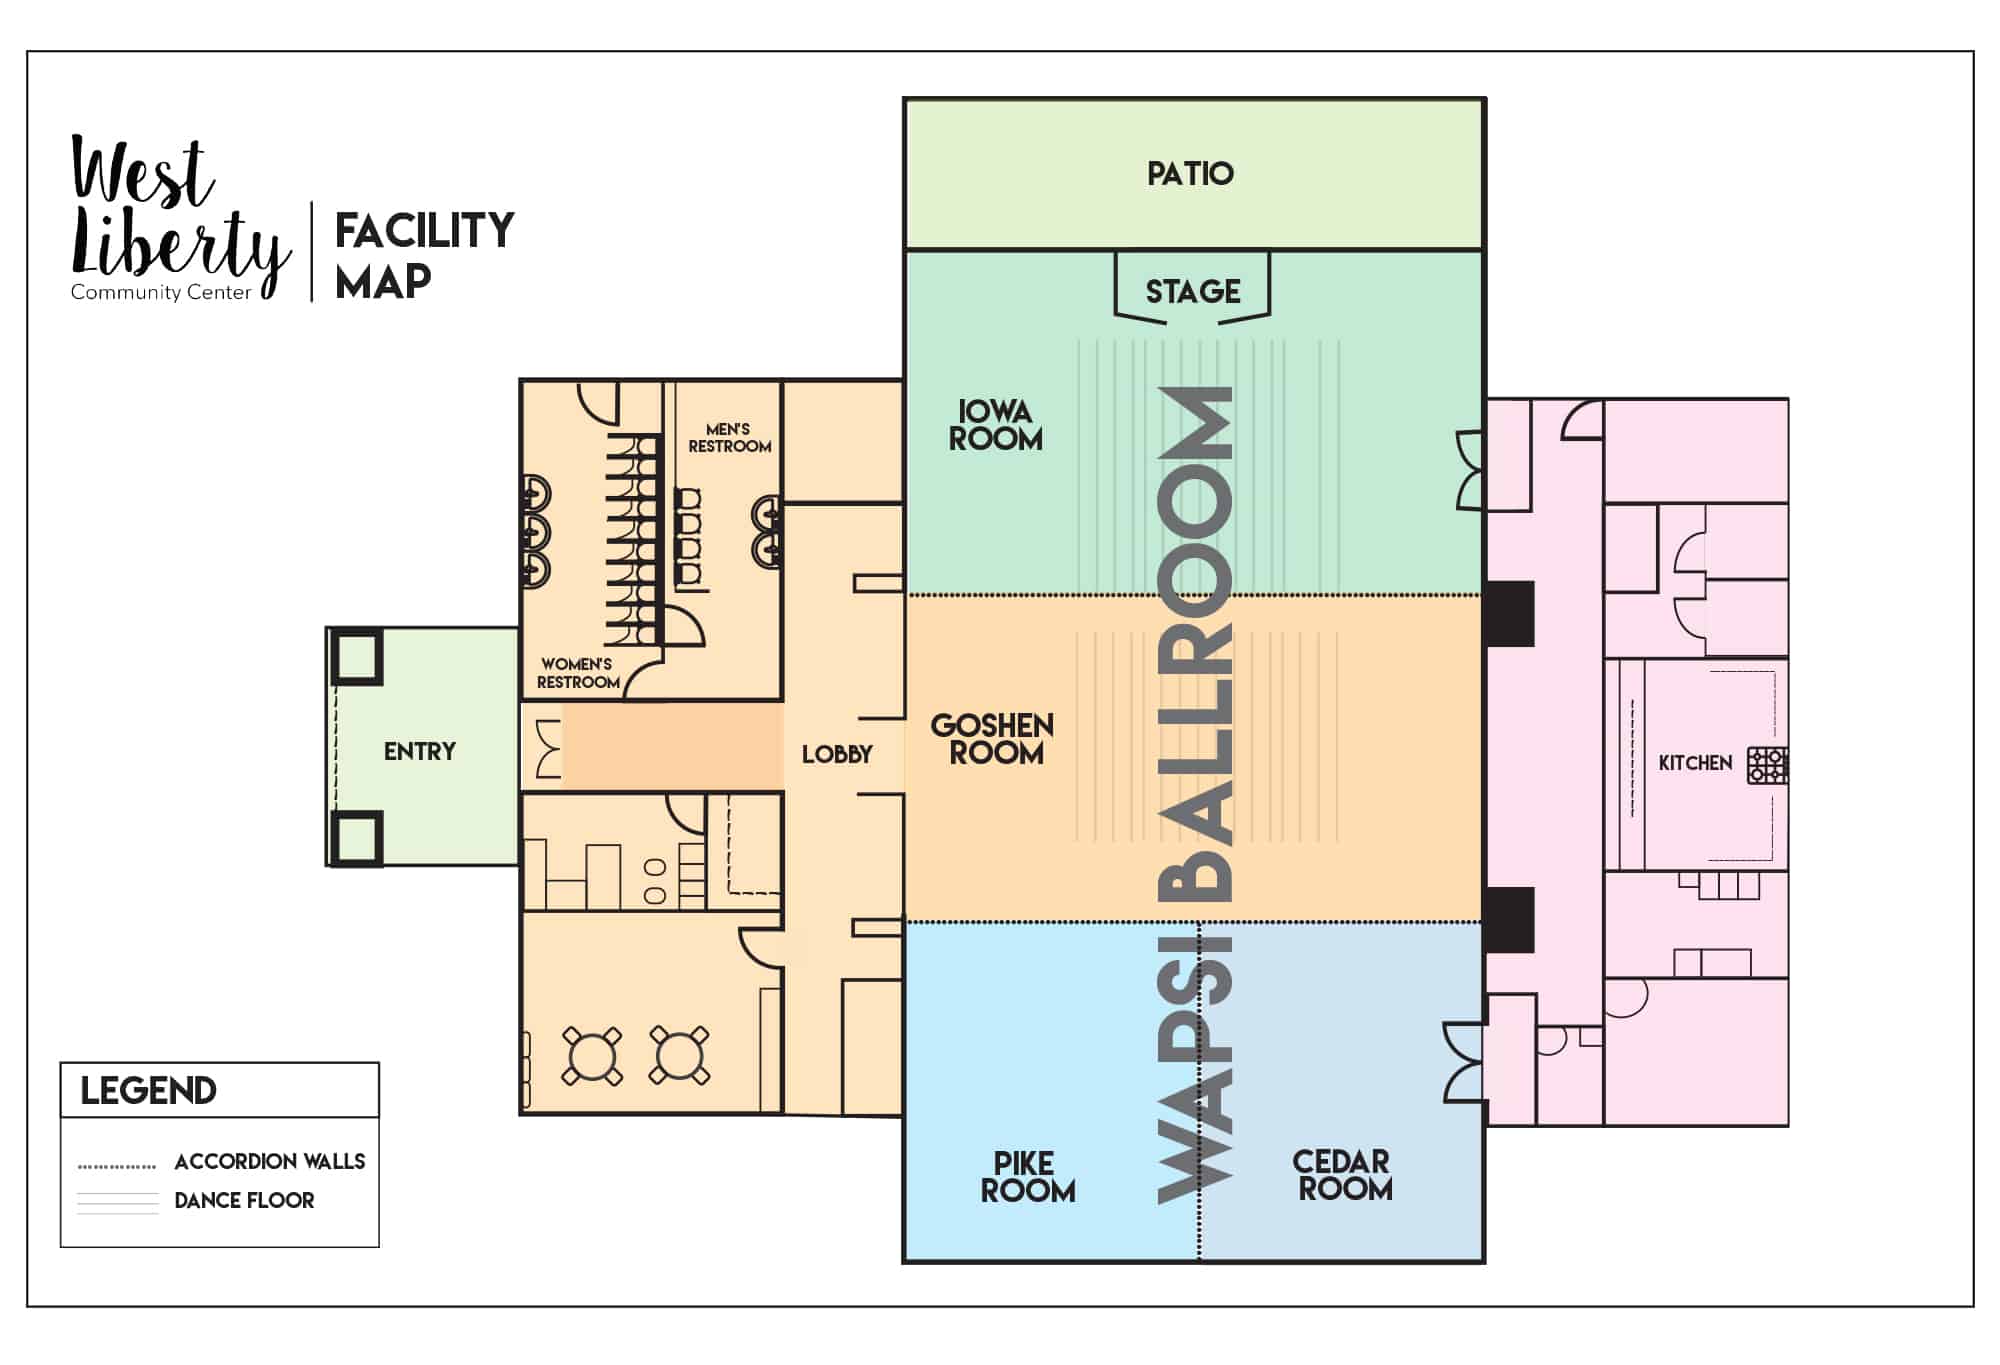 wlcc-facility-map